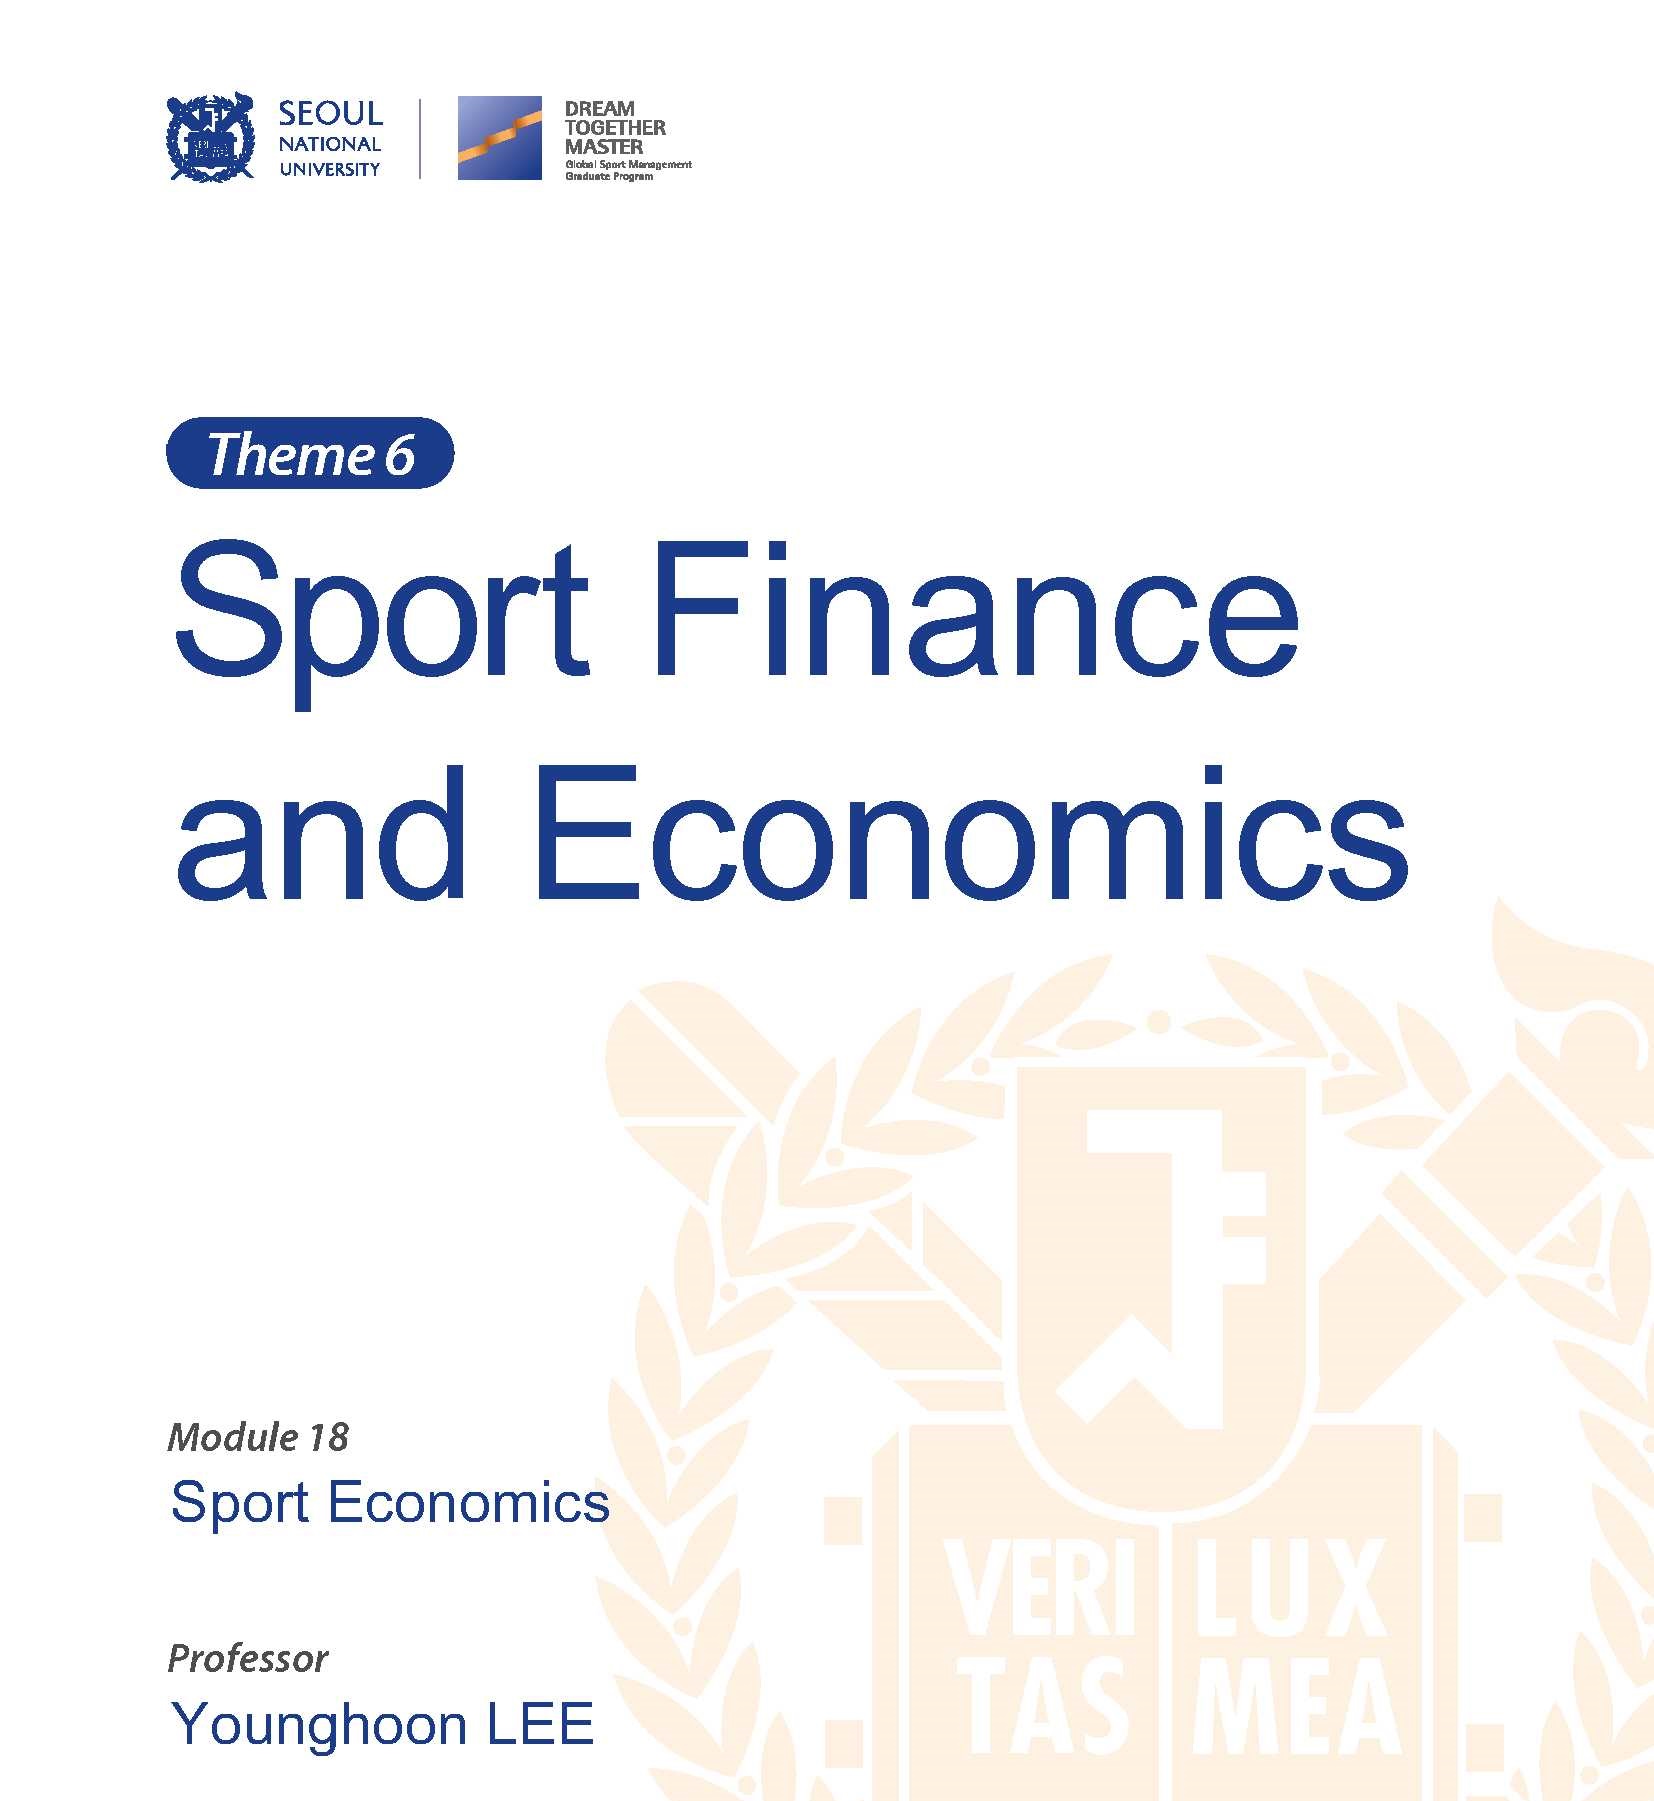 Module 18 Sport Economics